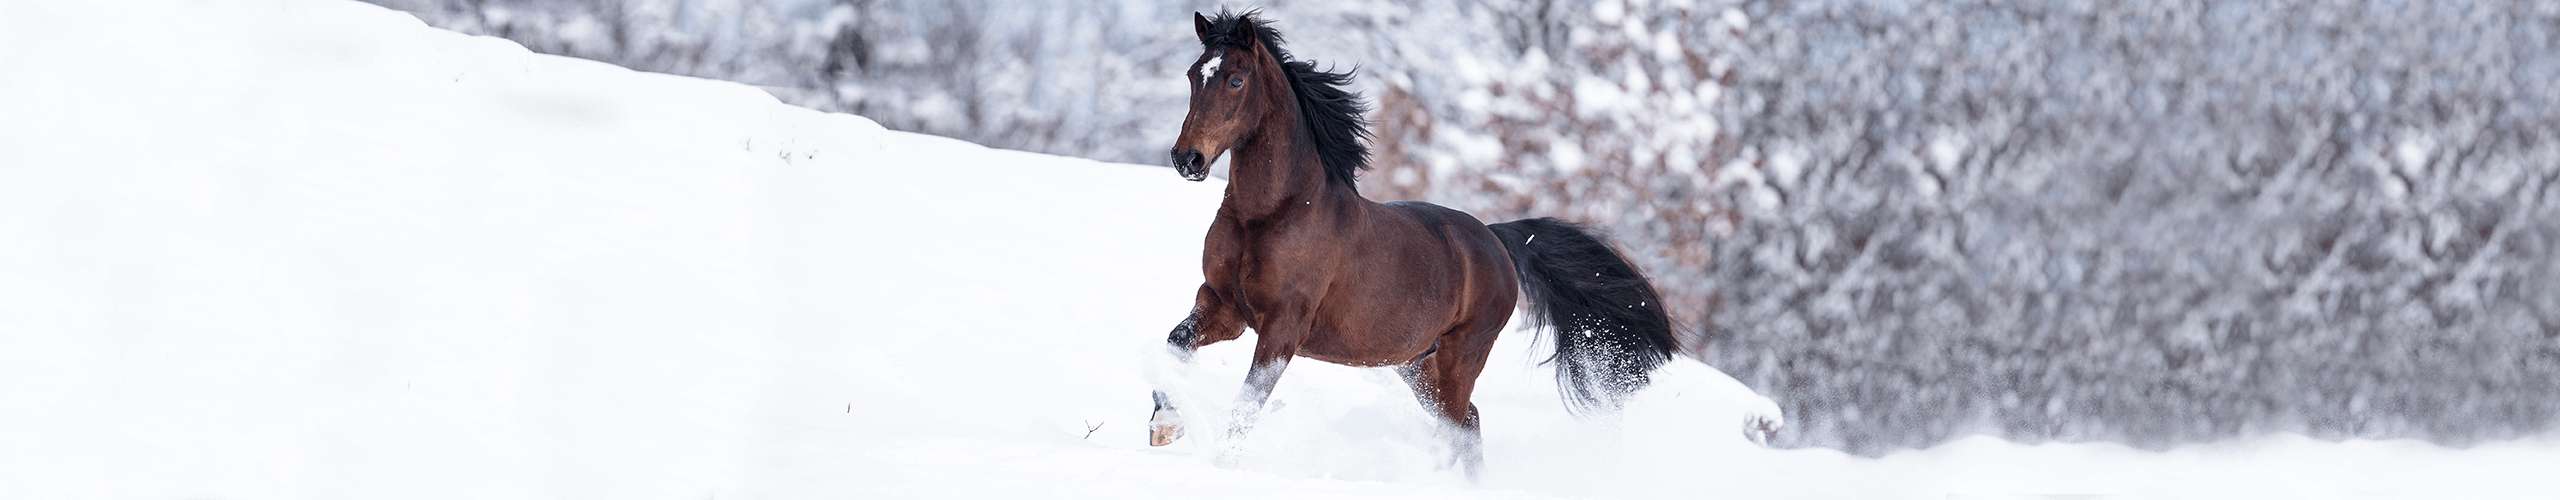 Pferd Atemwege Winter